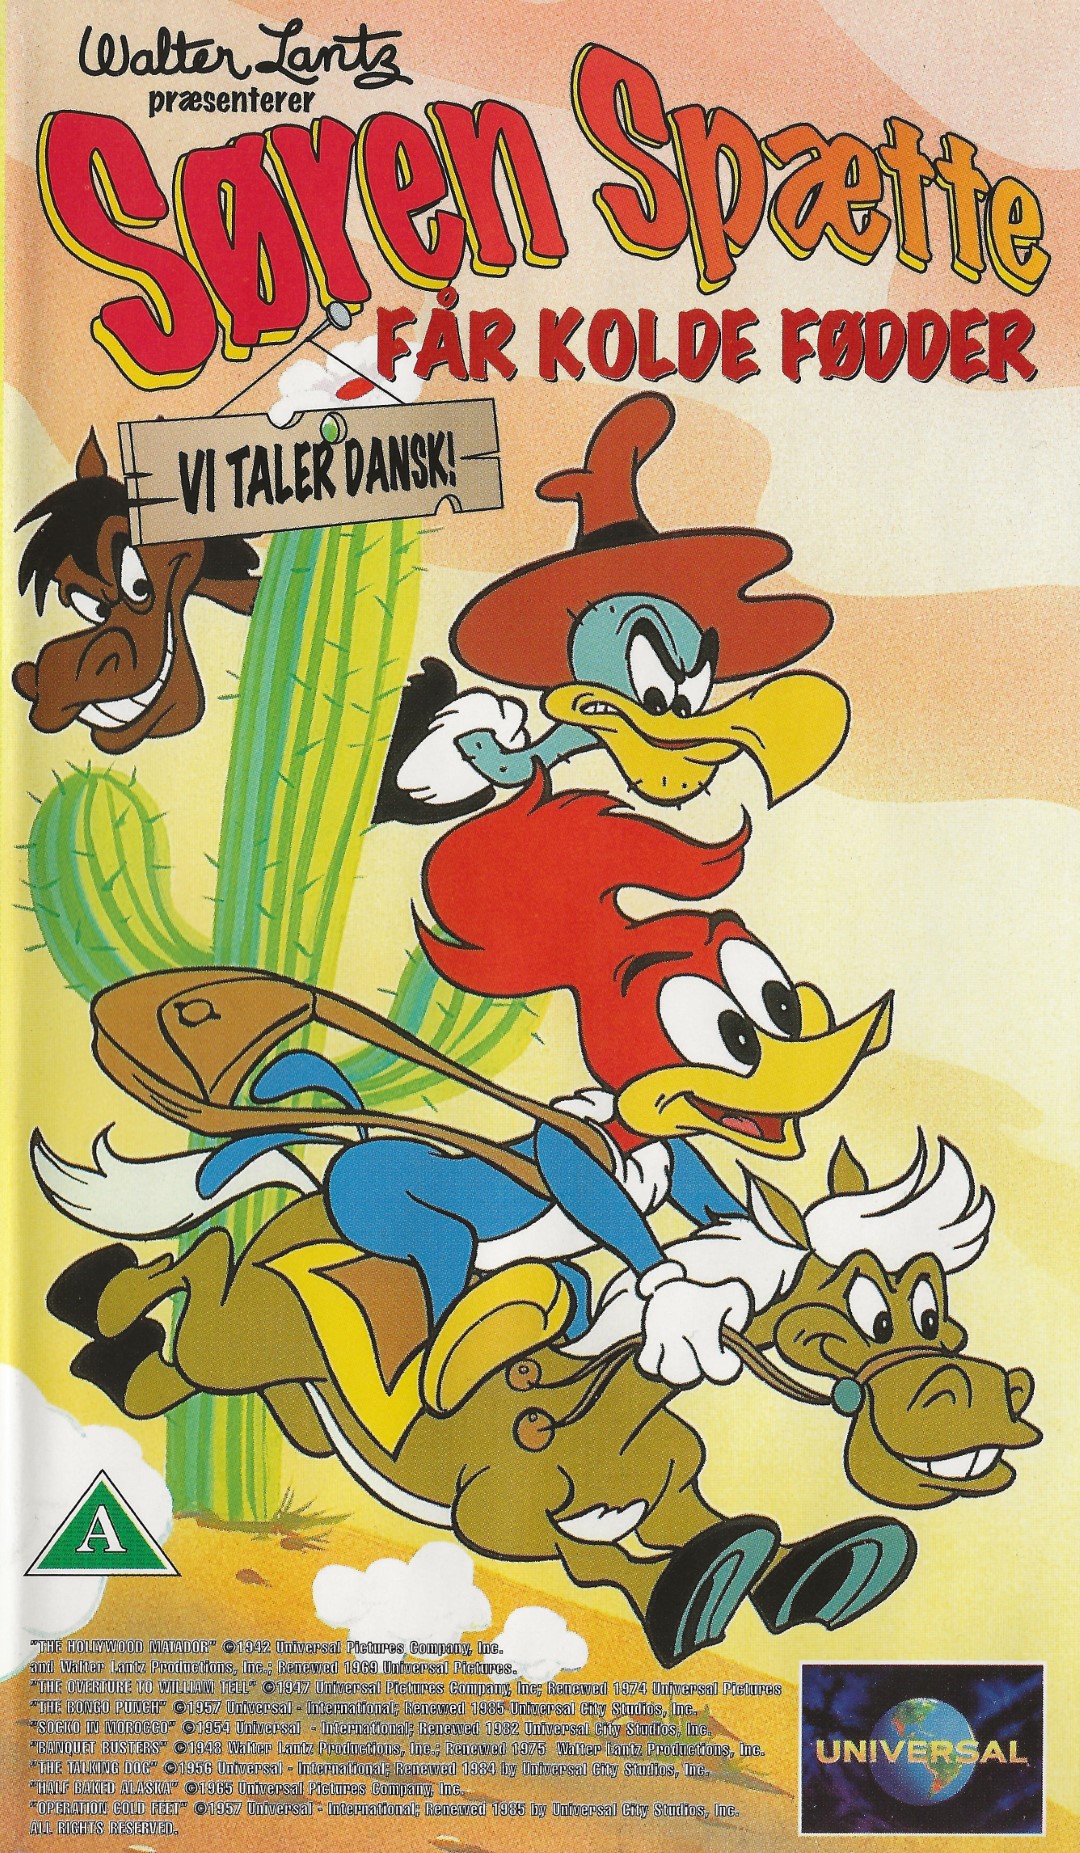 Søren Spætte får kolde fødder <p>Org.titel: Woody Woodpecker - Compilation 2</p> VHS Universal 1995